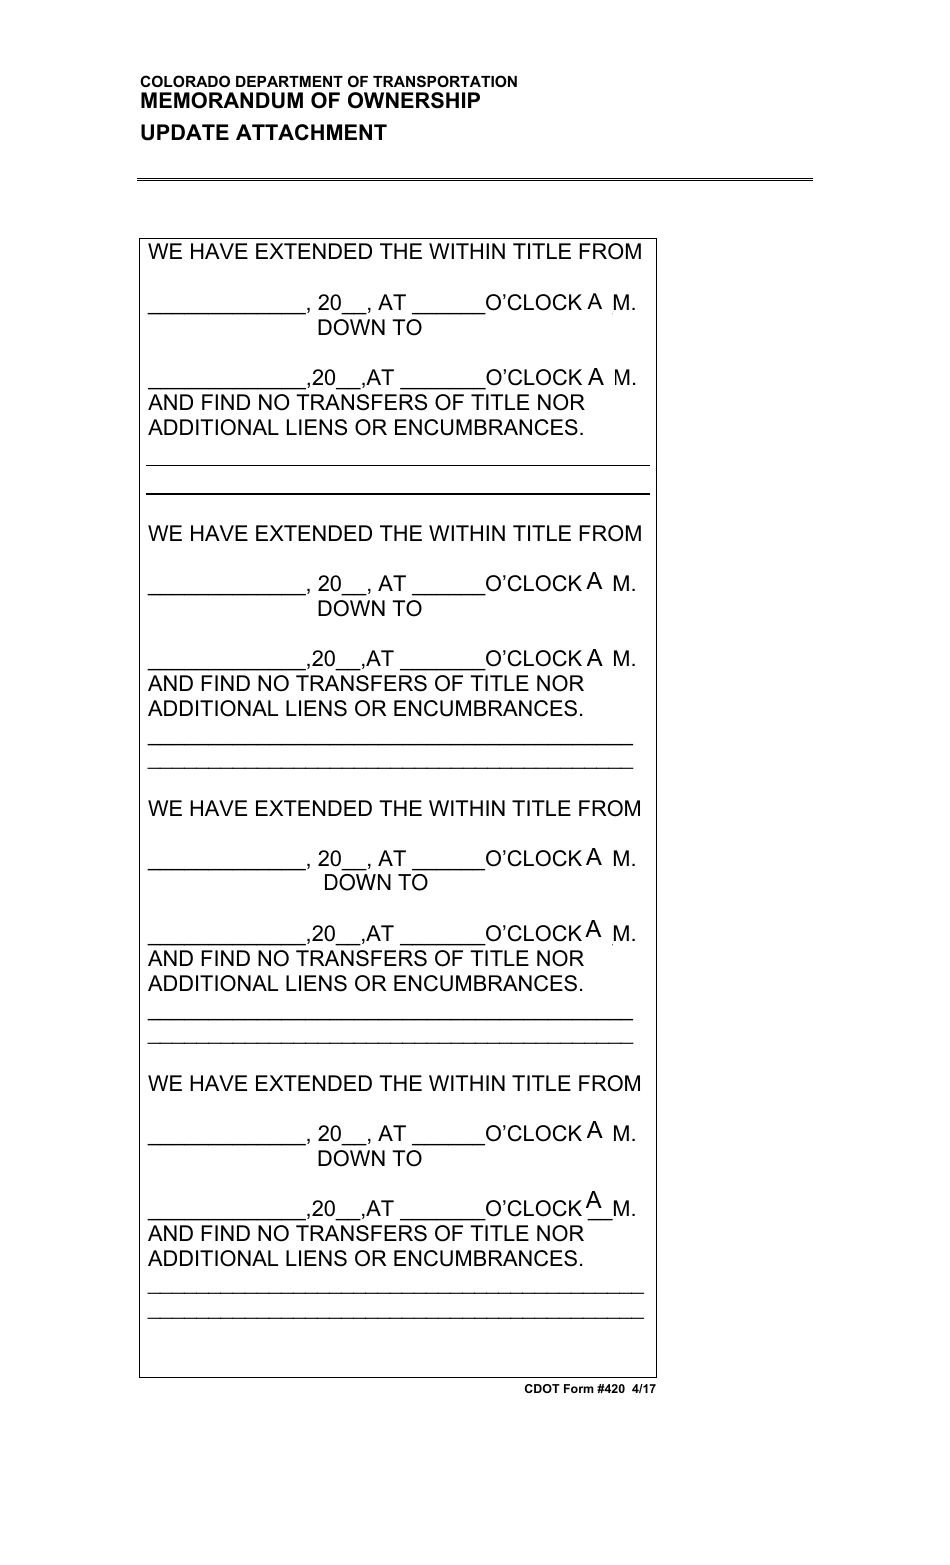 CDOT Form 420 Memorandum of Ownership Update Attachment - Colorado, Page 1